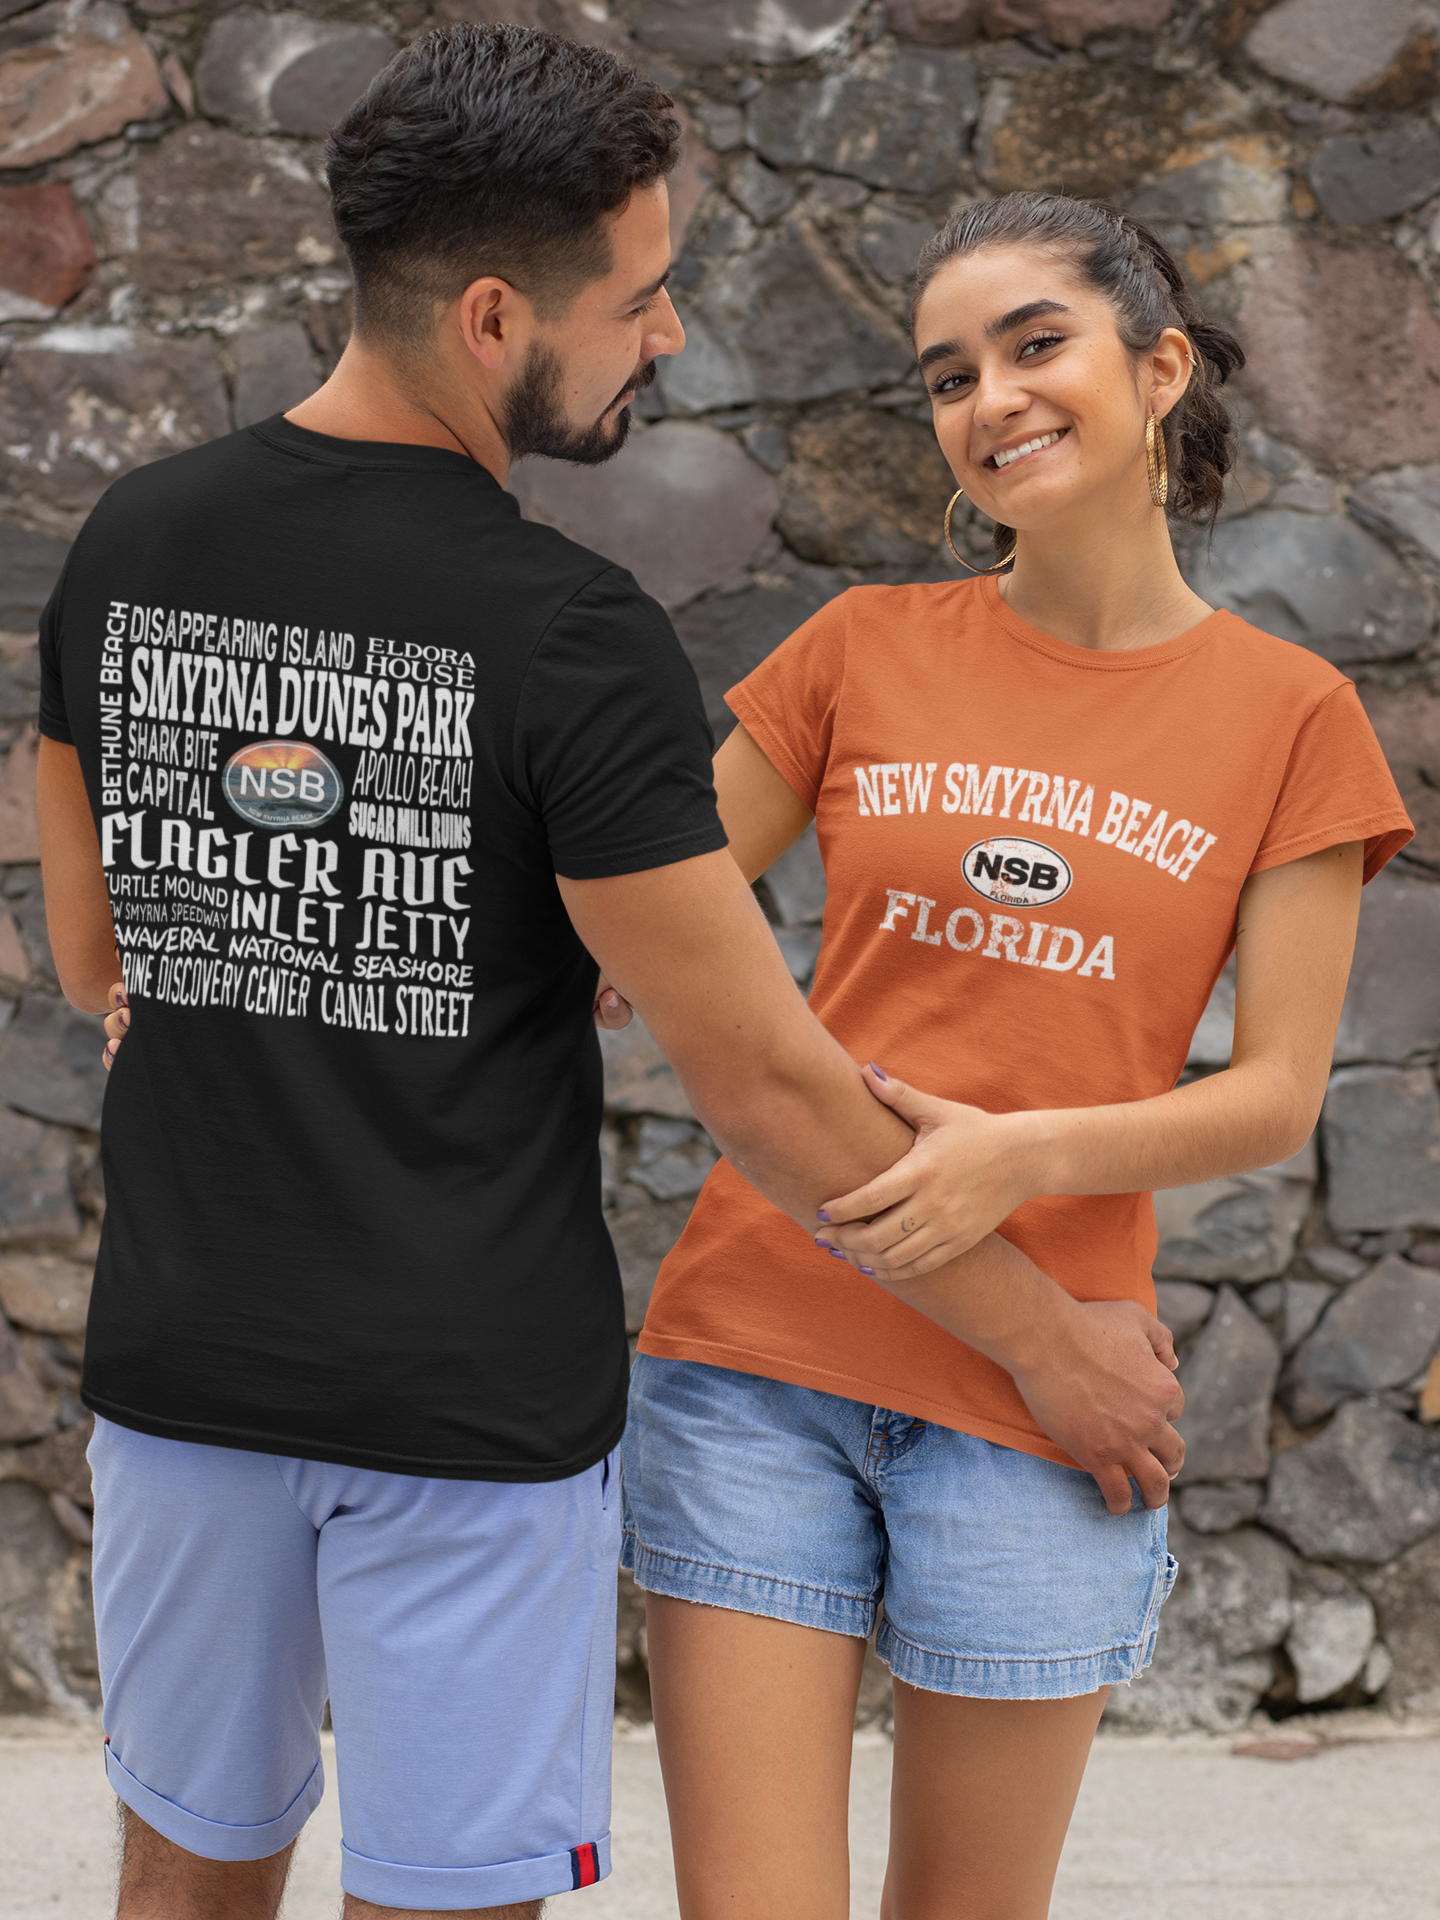 New Smyrna Beach Women's 2-Sided T-Shirt Souvenir - My Destination Location